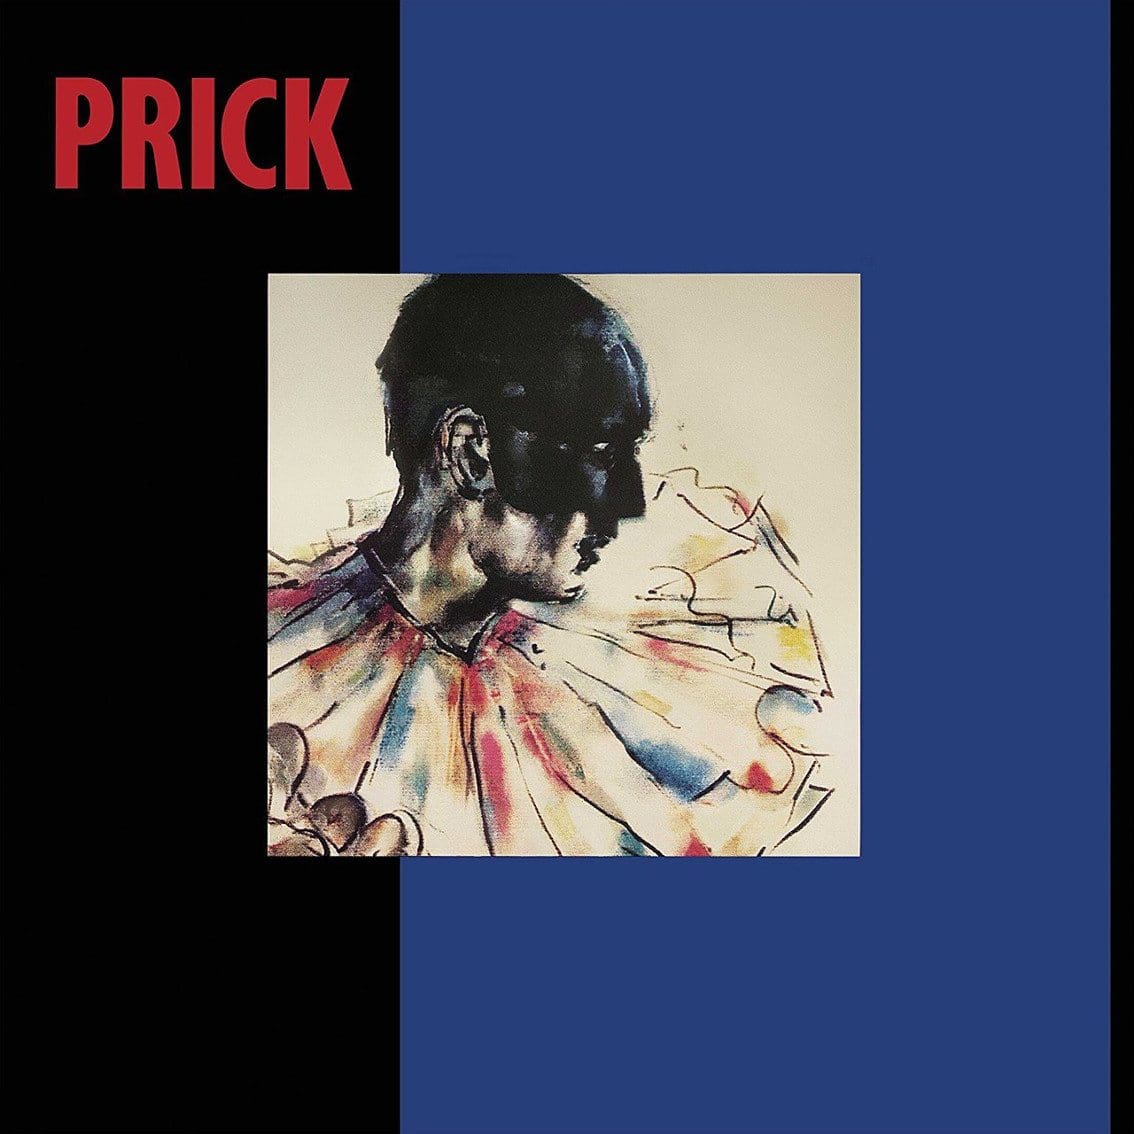 Reissue of Trent Reznor protégé Prick's self-titled debut album on vinyl available now